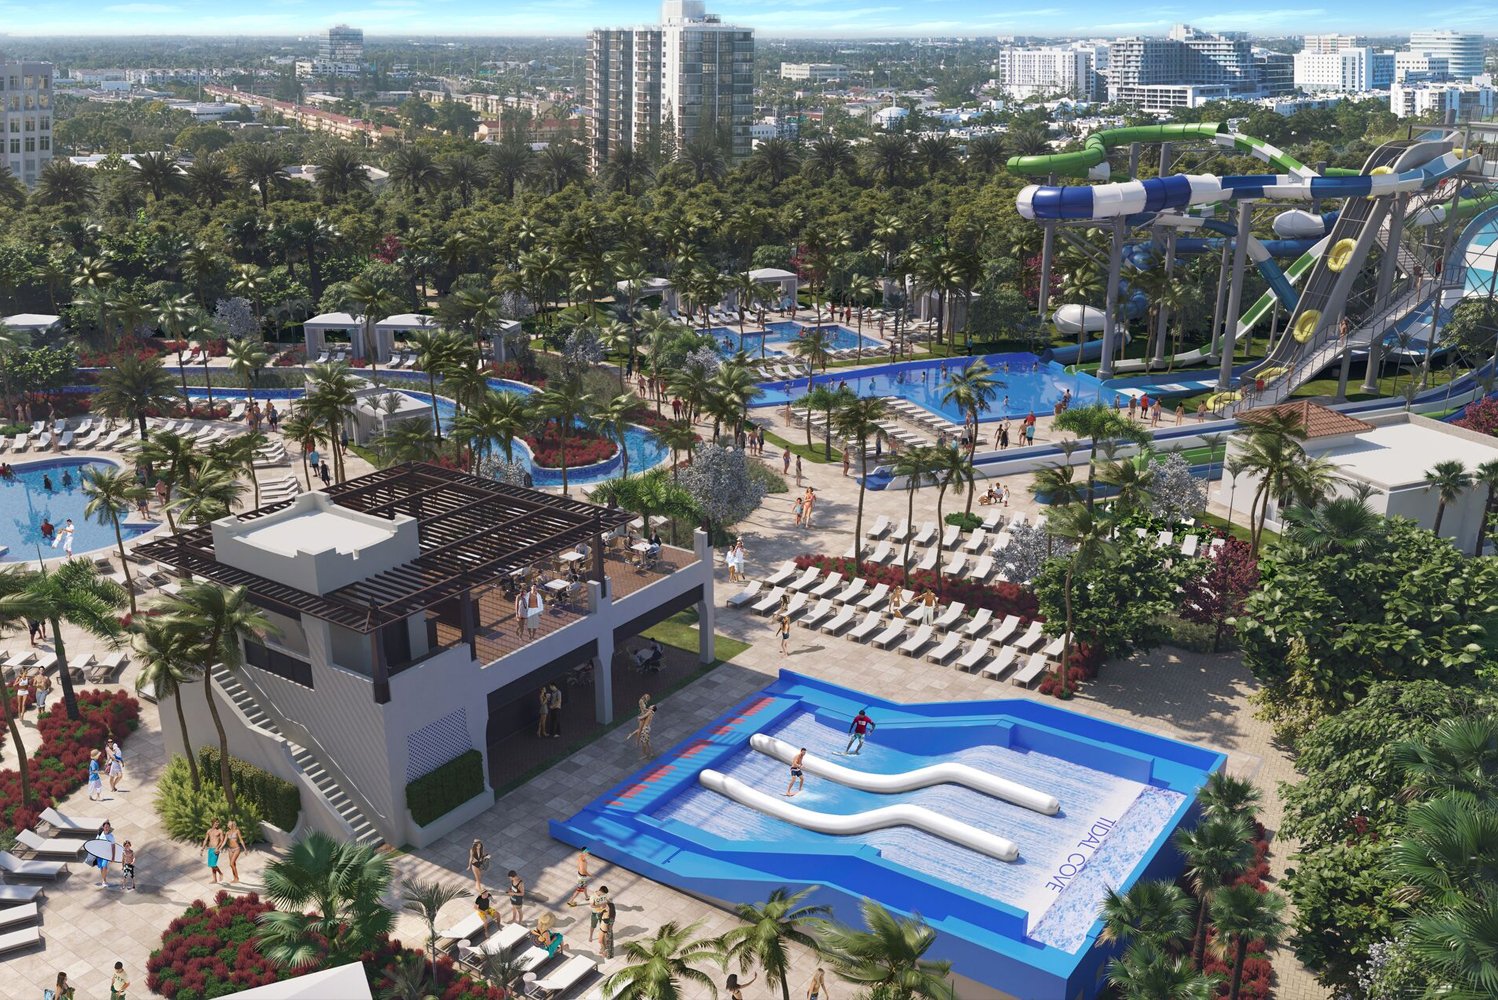 JW Marriott Miami Turnberry Resort  Spa to open new waterpark